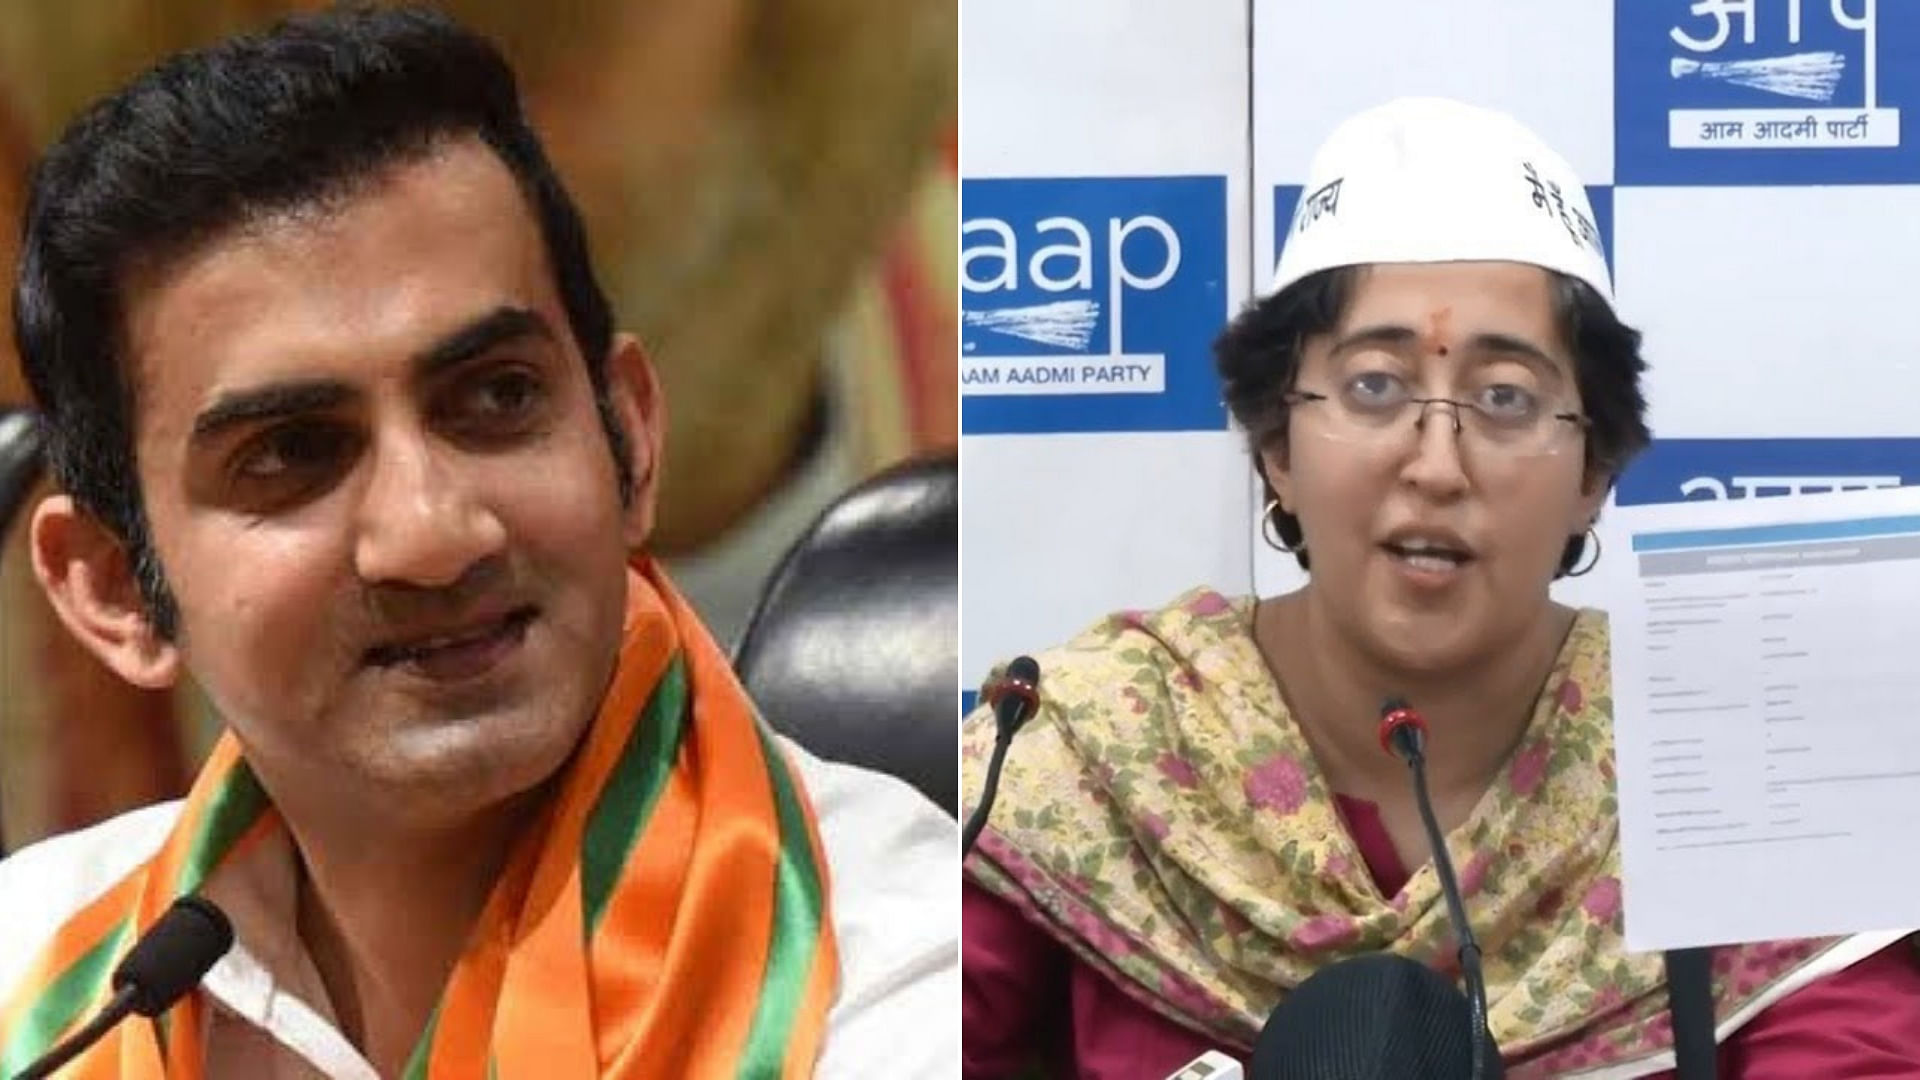 BJP and AAP’s East Delhi candidates Gautam Gambhir and Atishi.